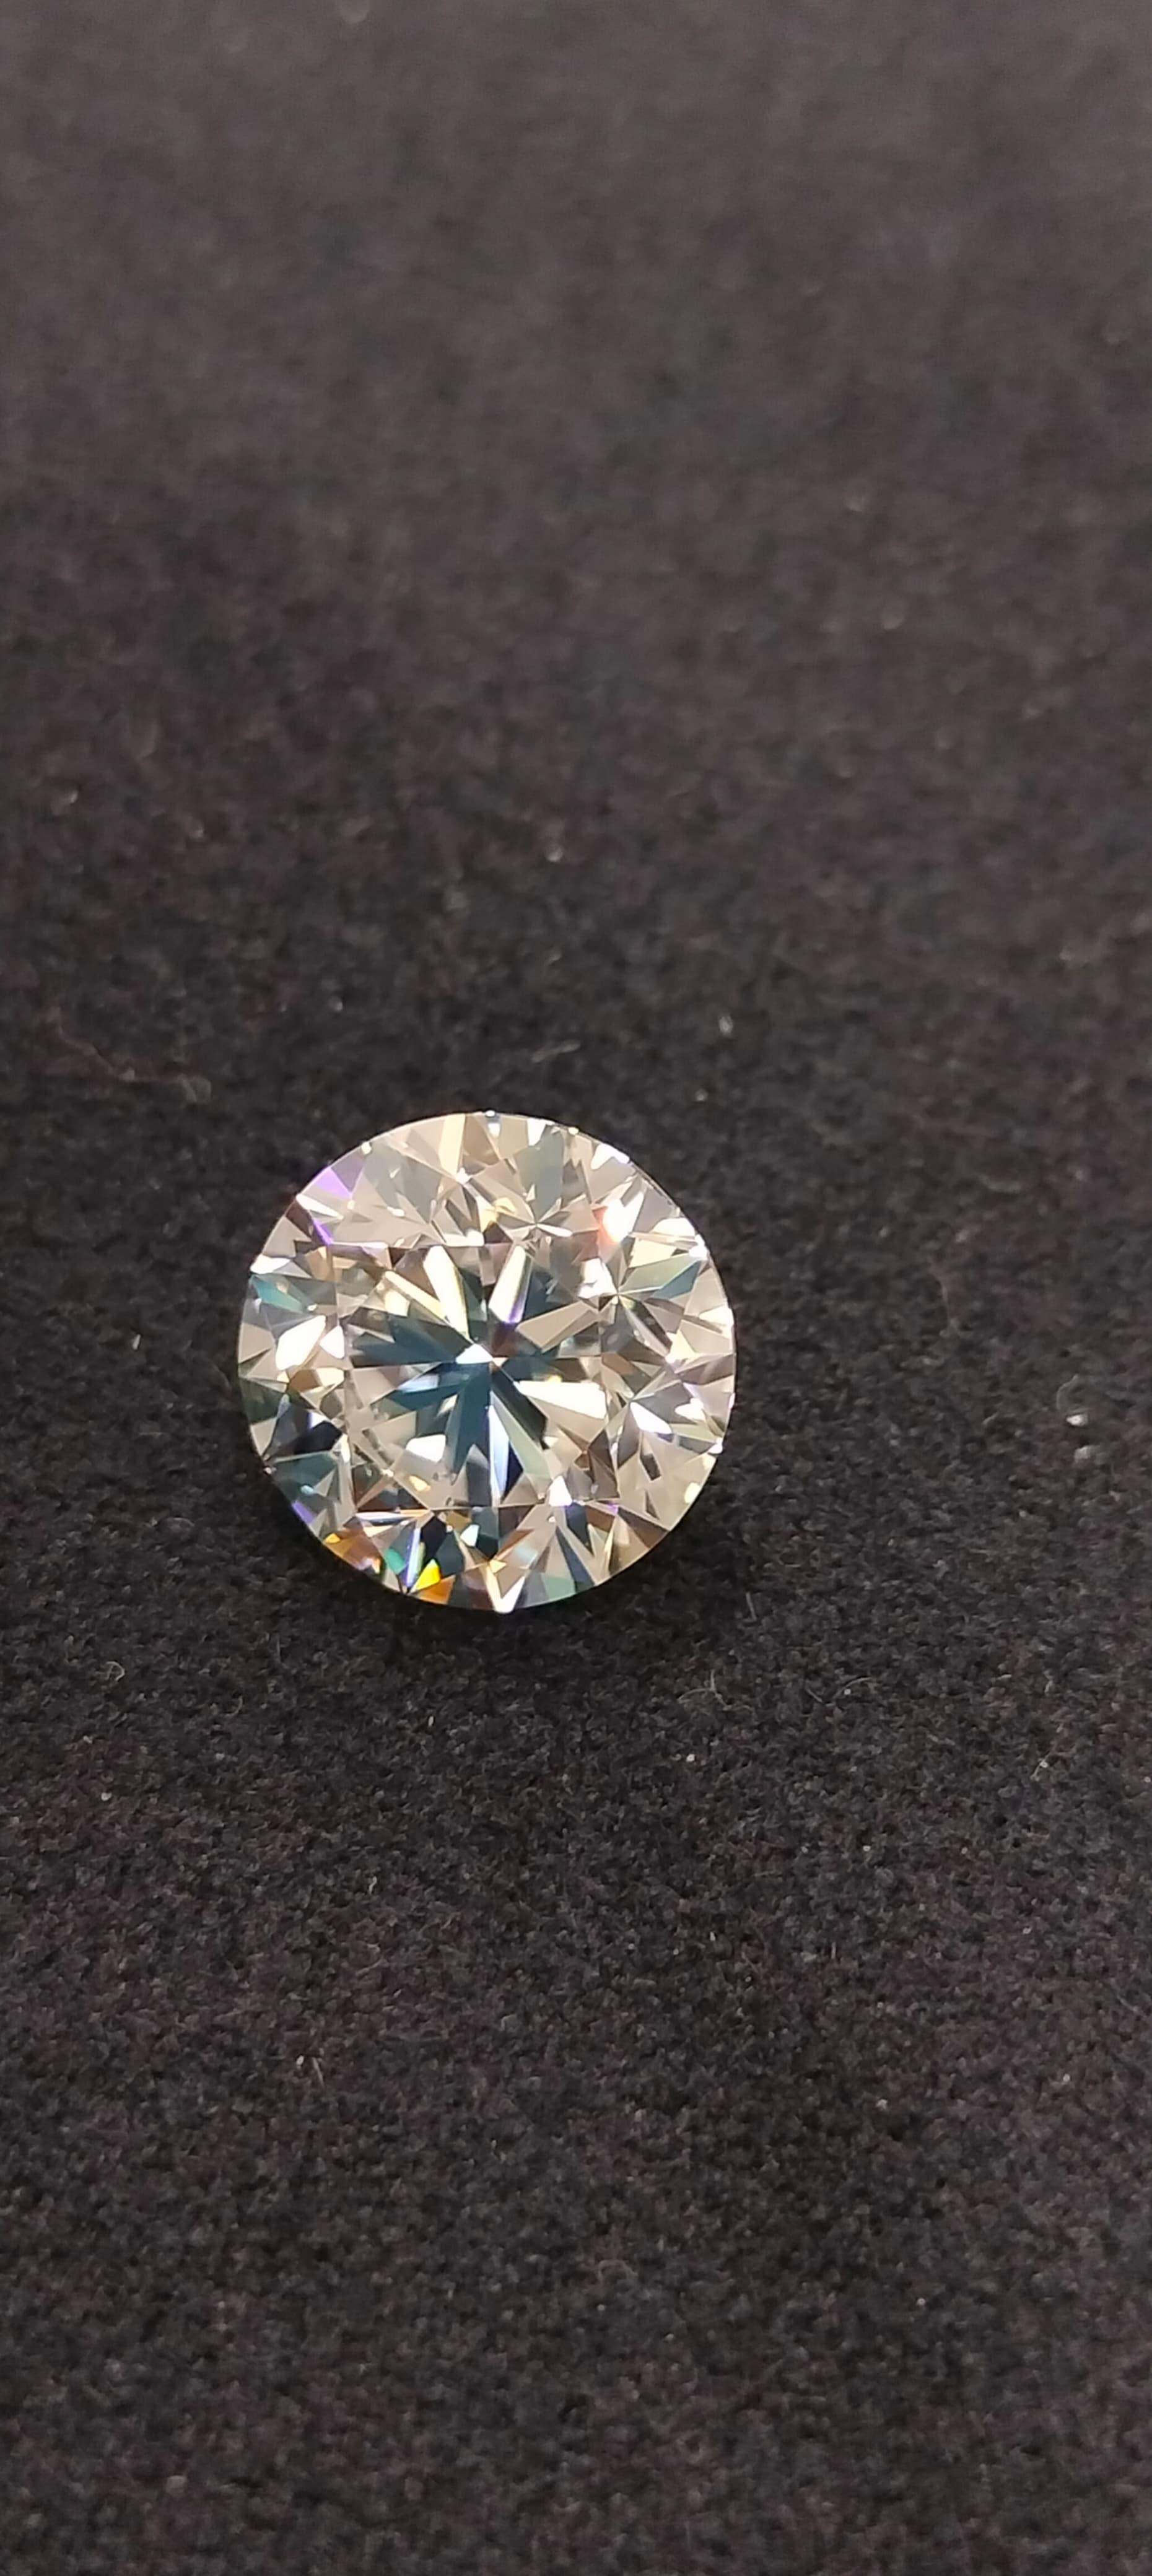 Natural Diamond graded by IGI.
                      
Shape: Round Brilliant
Weight: 3.05 CT
Color: D
Clarity: VS1
Cut: Good
Polish: Excellent
Symmetry: Very good
Fluorescence: Slight
Laser inscription : IGI 628492059